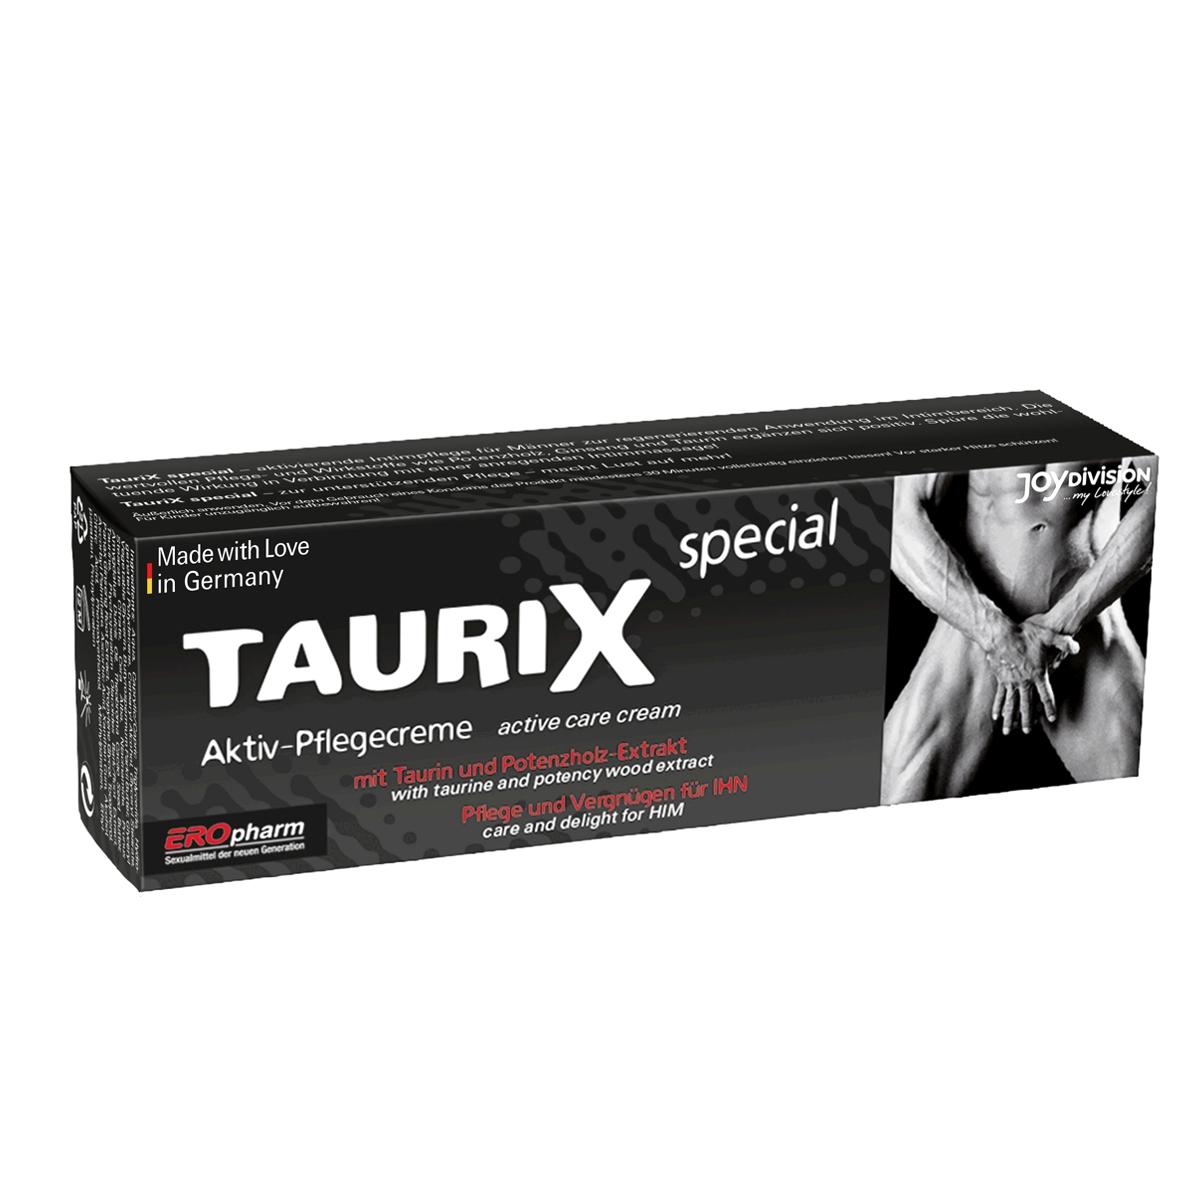 JOYDIVISION Stimulacioni gel za muškarce Eropharm Taurix 40ml